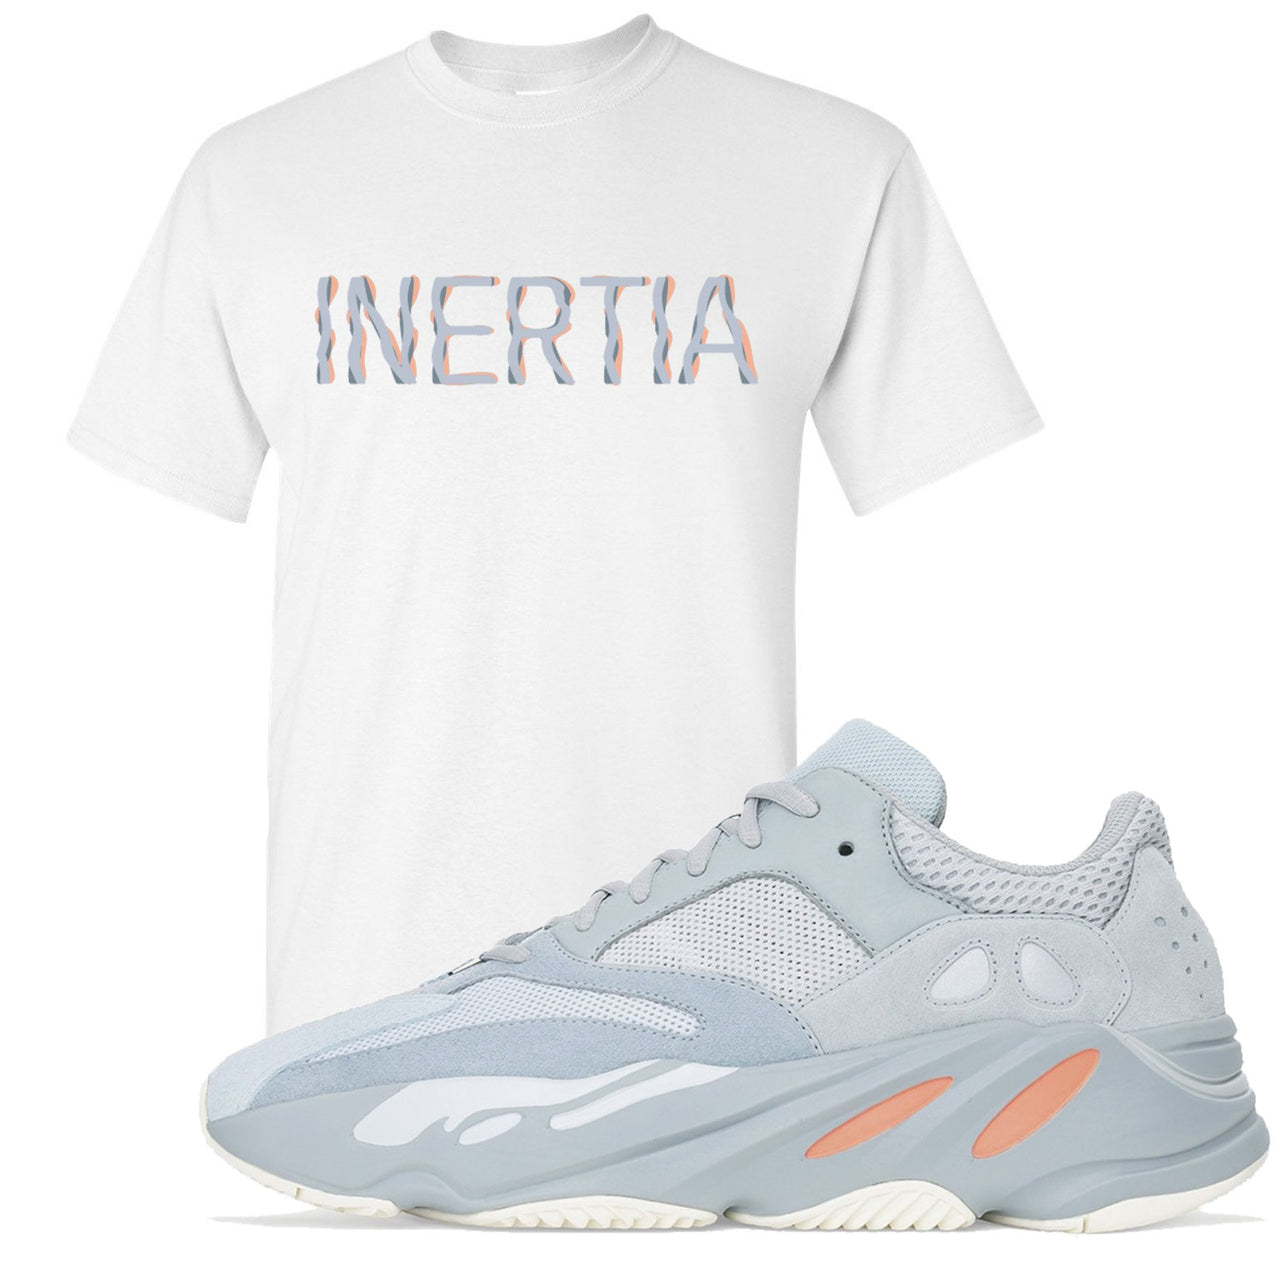 Inertia 700s T Shirt | Inertia, White